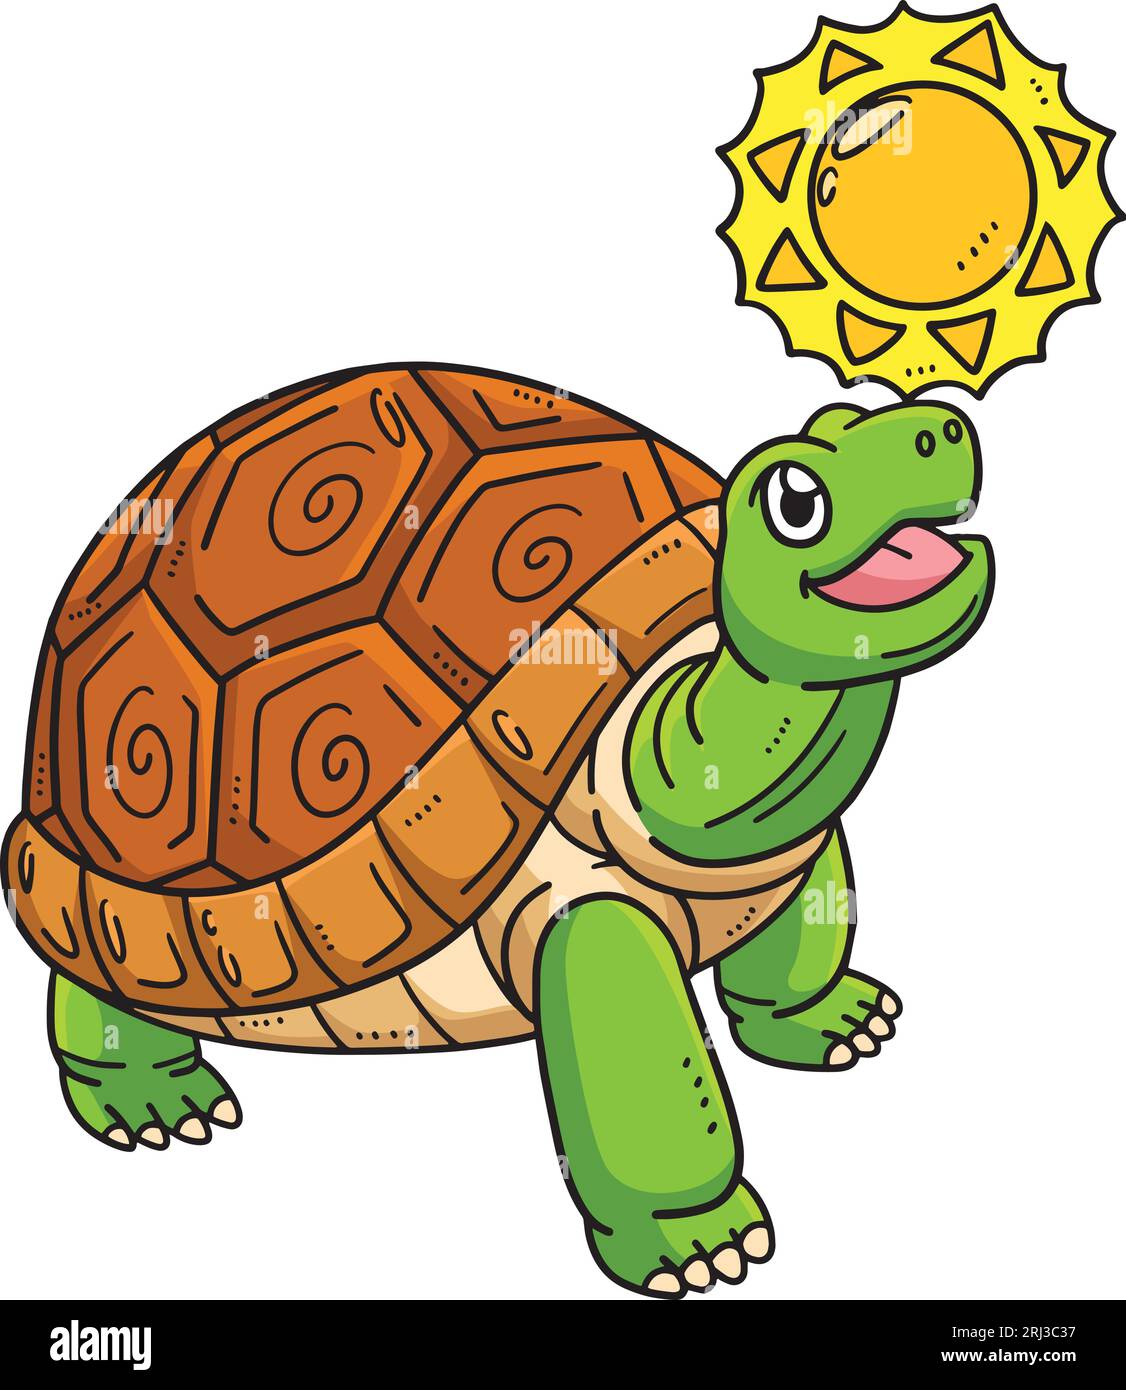 FREE! - Giant Tortoise Art Colouring Sheet - Teaching Resources